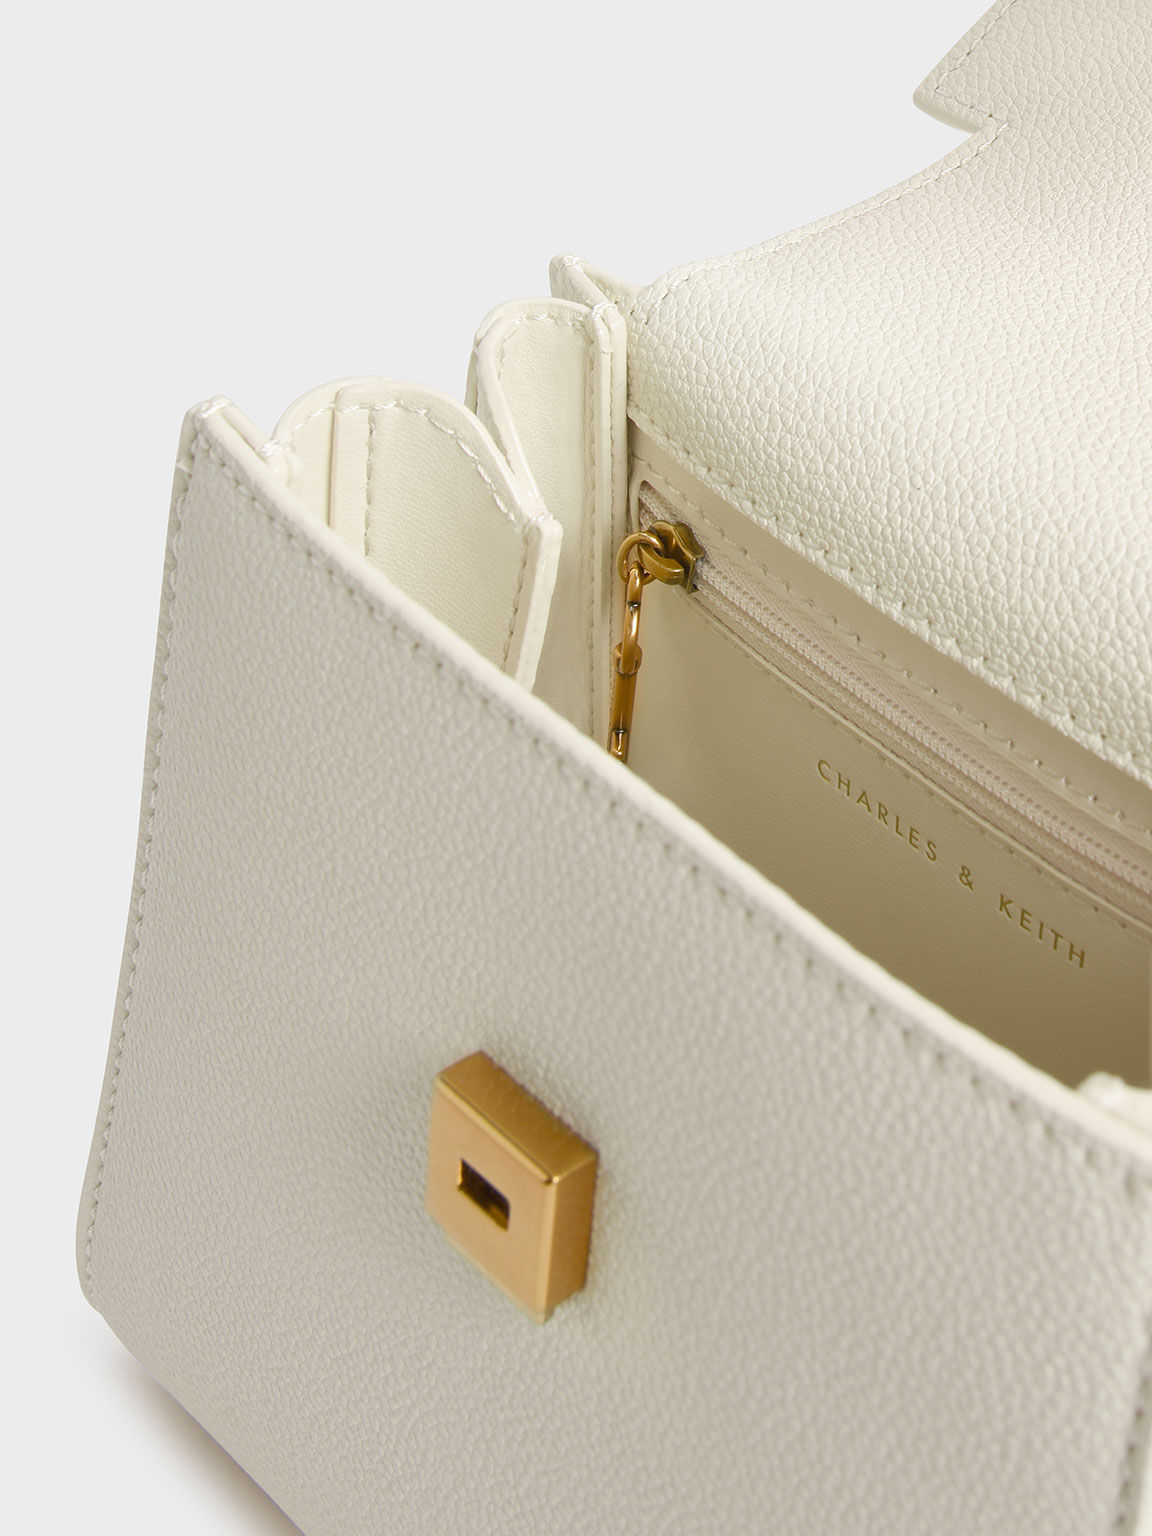 Women's Handbags | Exclusive Styles - CHARLES & KEITH US